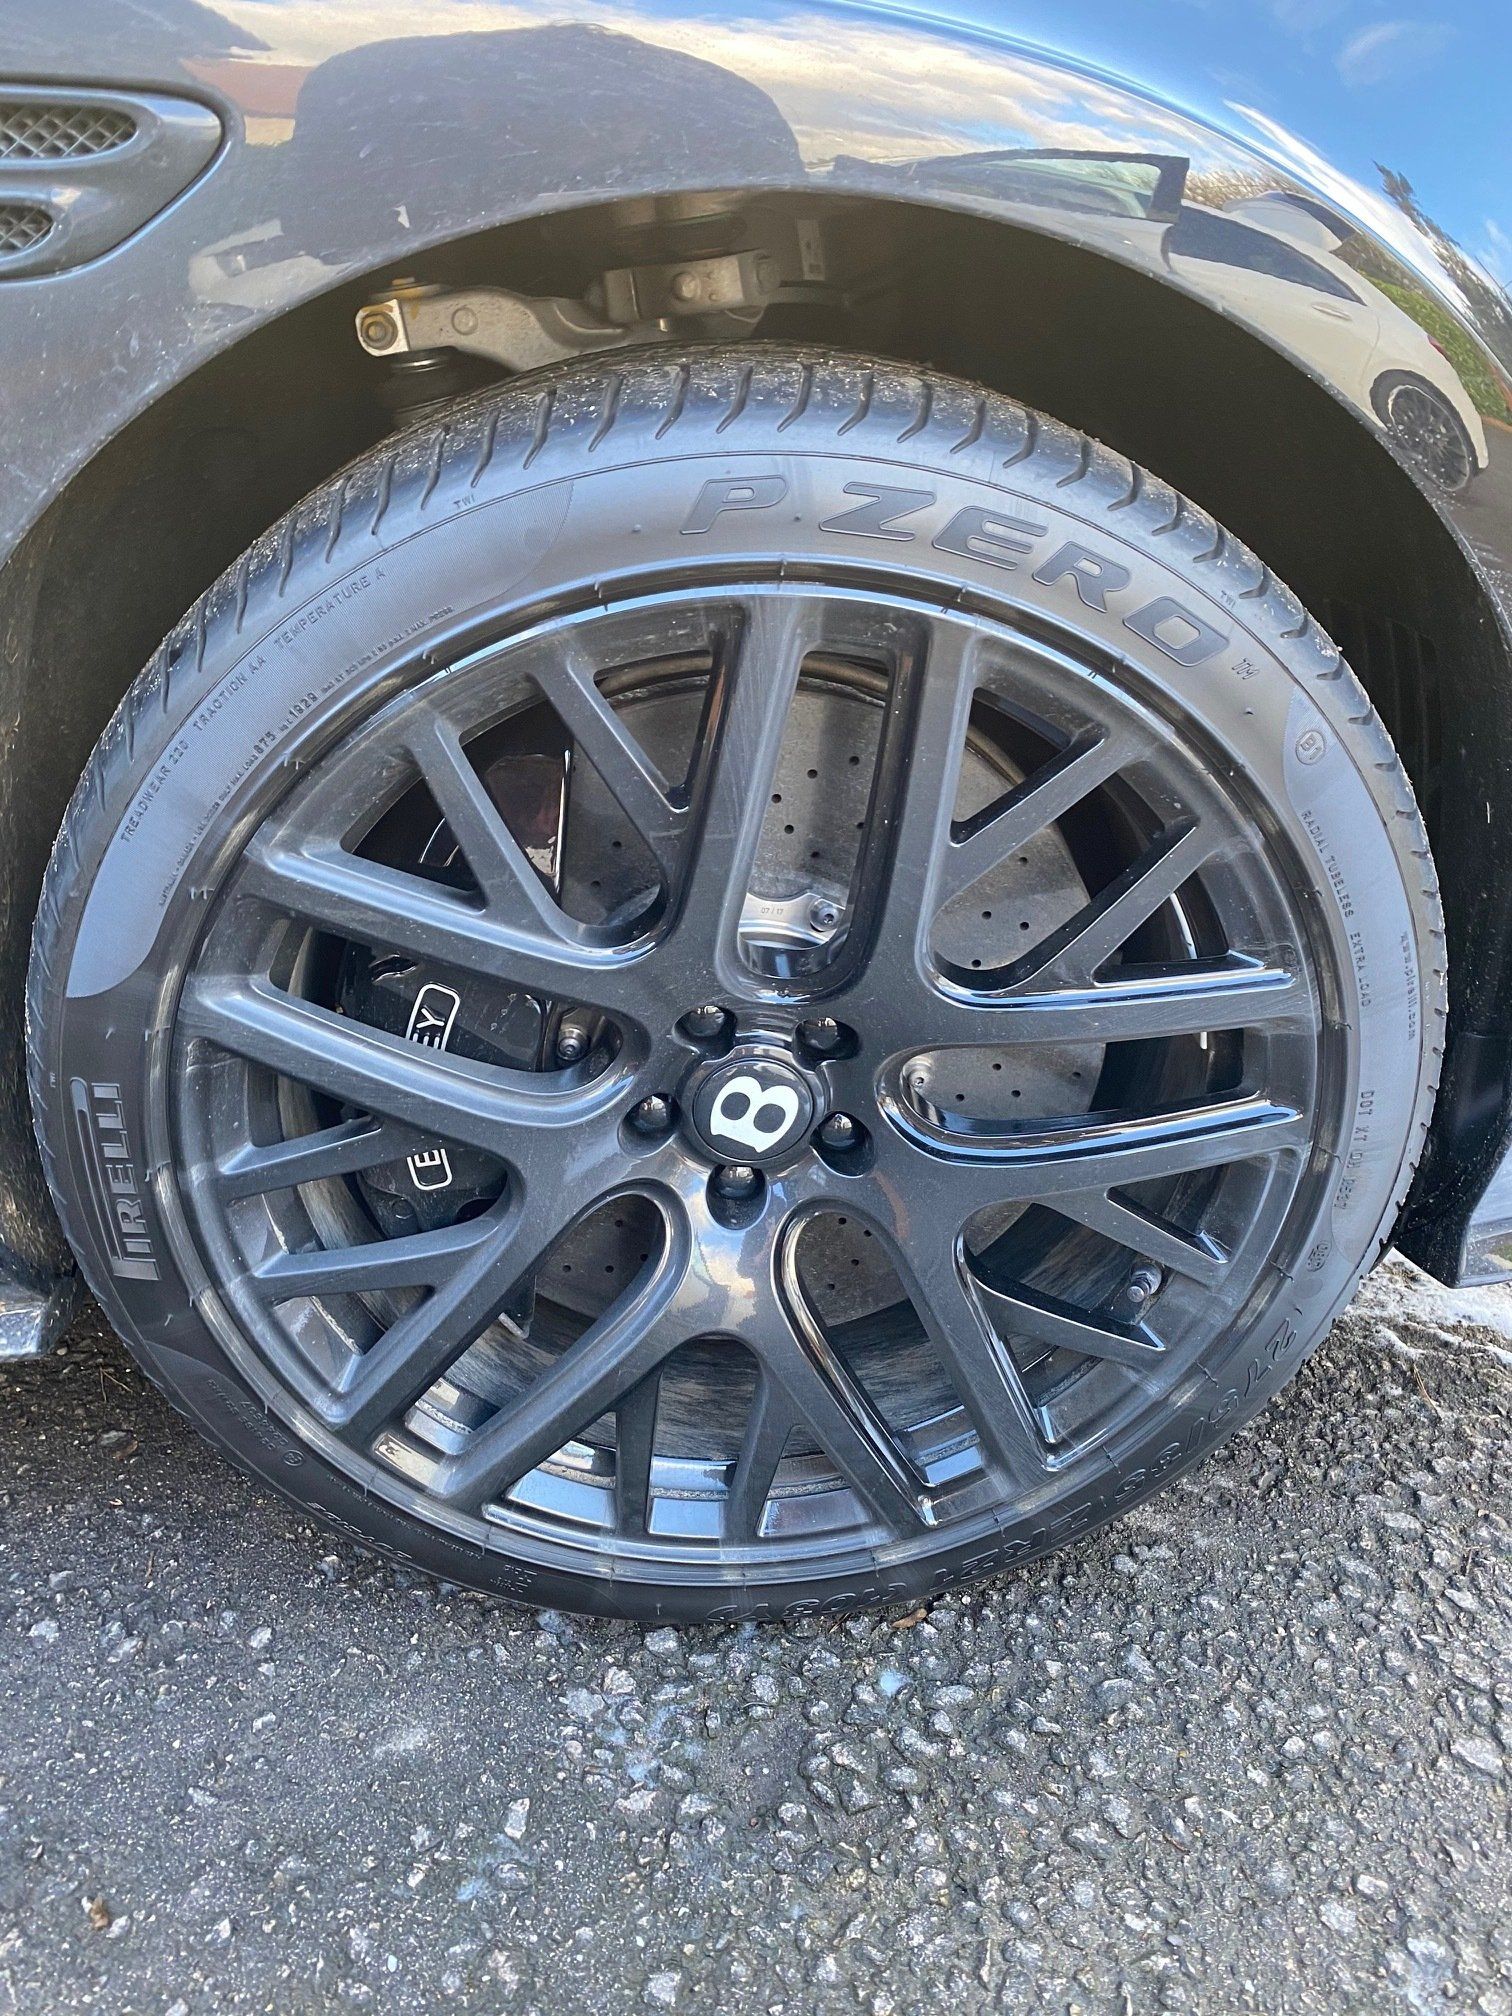 Dirty Bentley Wheel